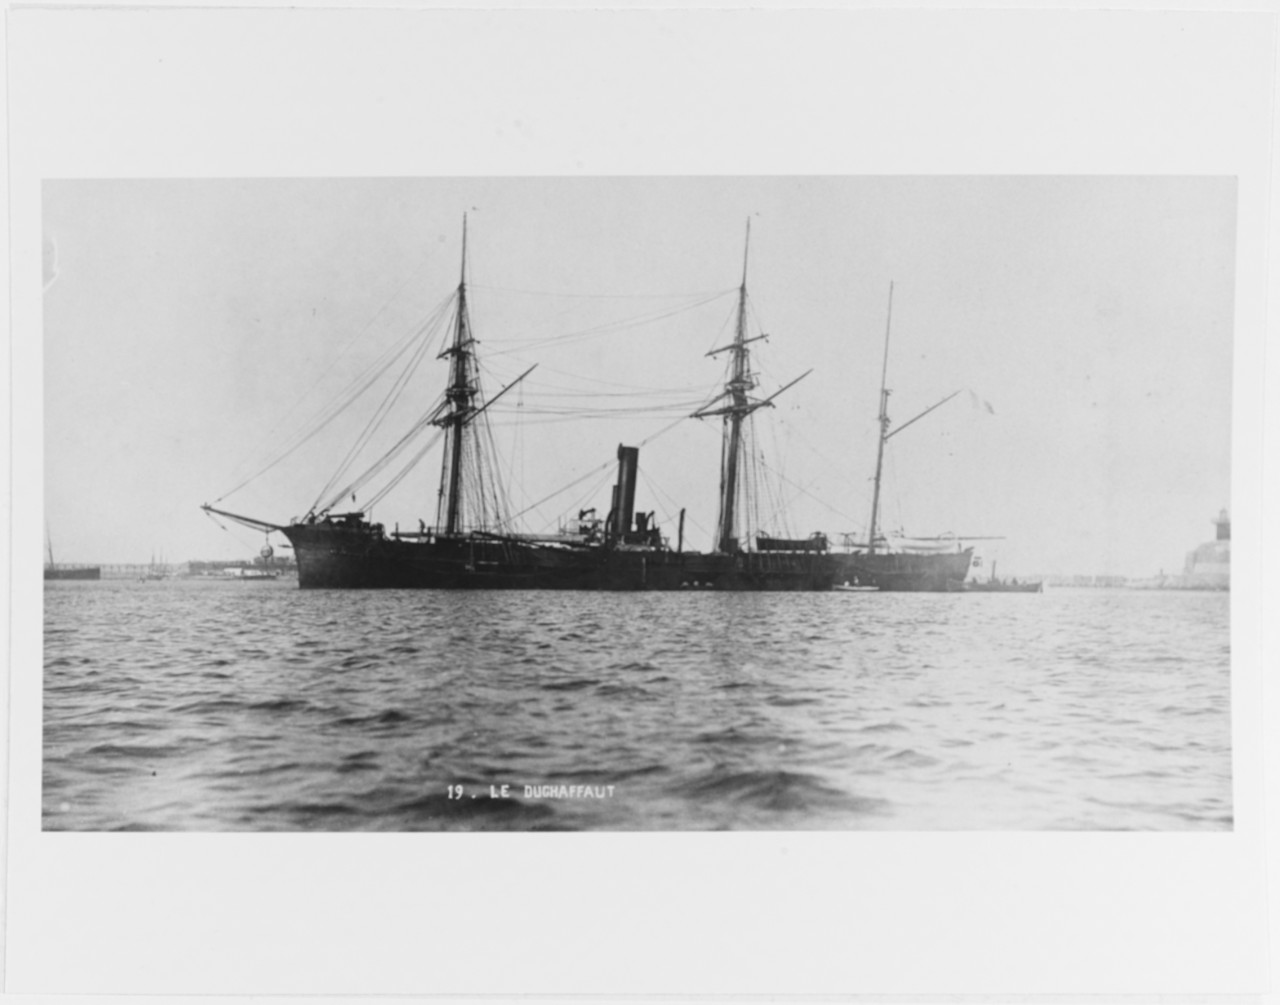 DUCHAFFAULT (French Cruiser, 1872-1908)